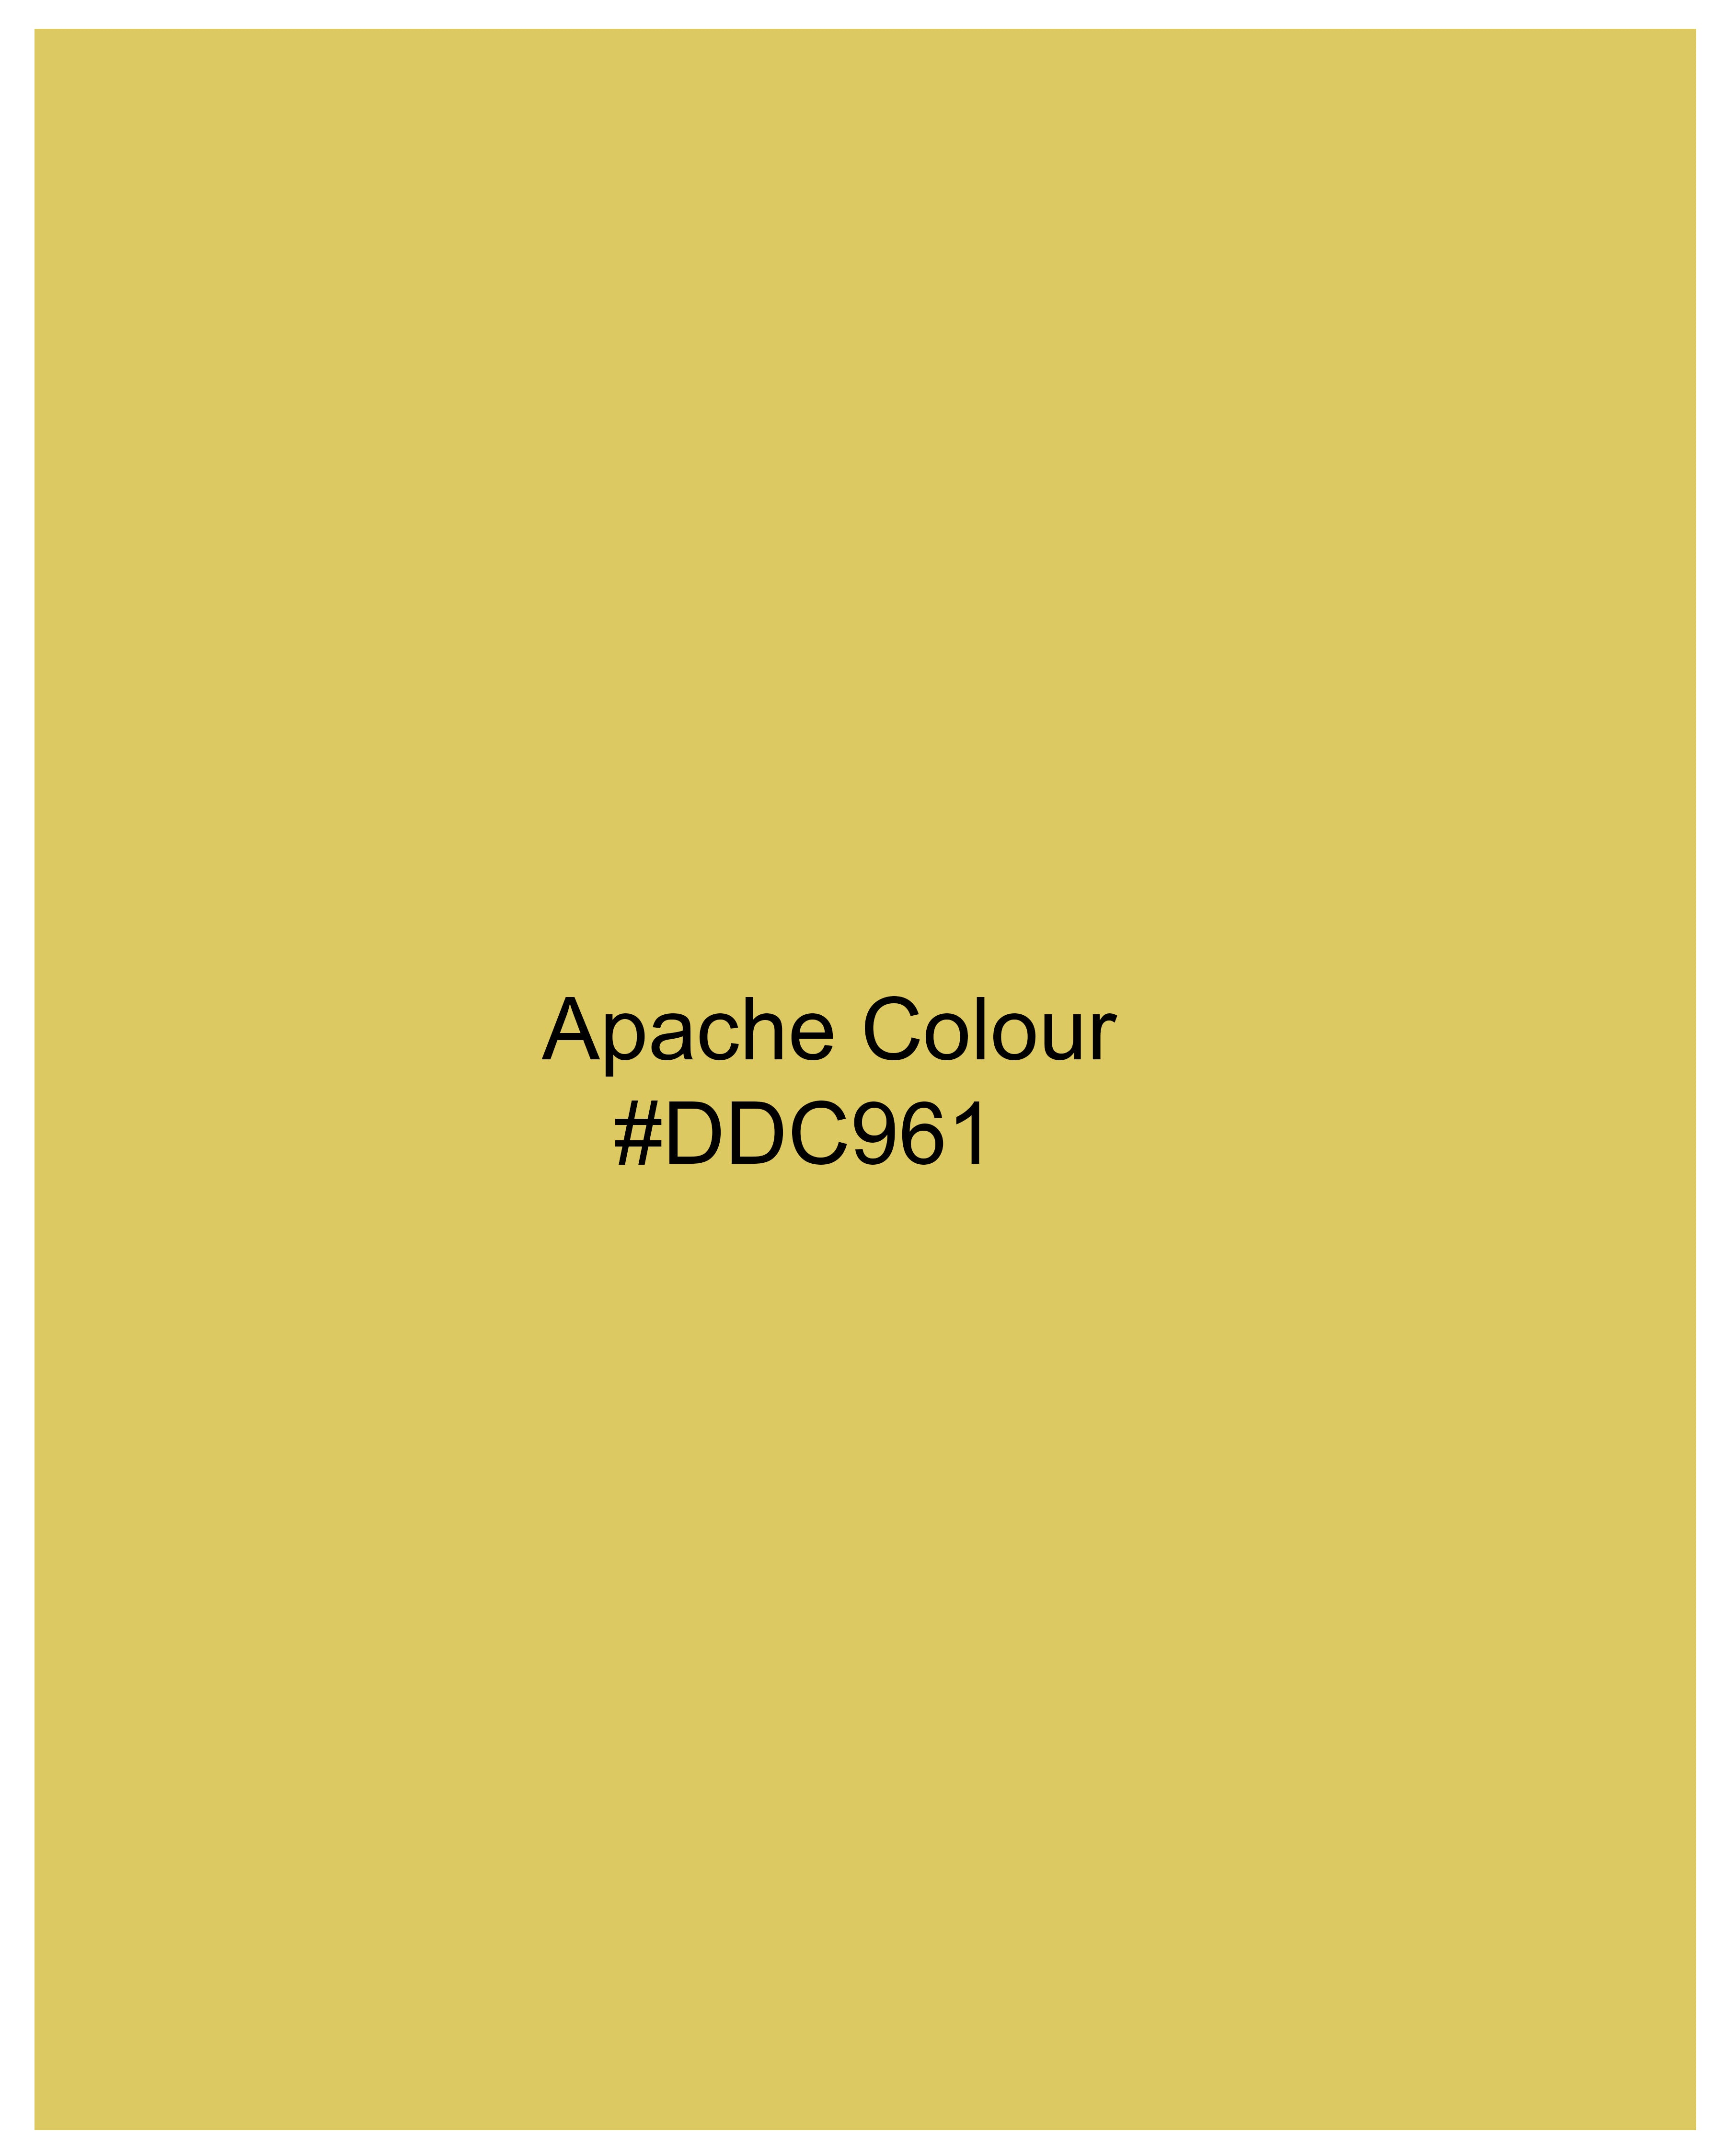  Apache Yellow Super Soft Designer Shirt 9272-SS-P350-38,9144-OS-BD-H-39,9144-OS-BD-H-40,9144-OS-BD-H-42,9144-OS-BD-H-44,9144-OS-BD-H-46,9144-OS-BD-H-48,9144-OS-BD-H-50,8912-WOC-P339-H-52